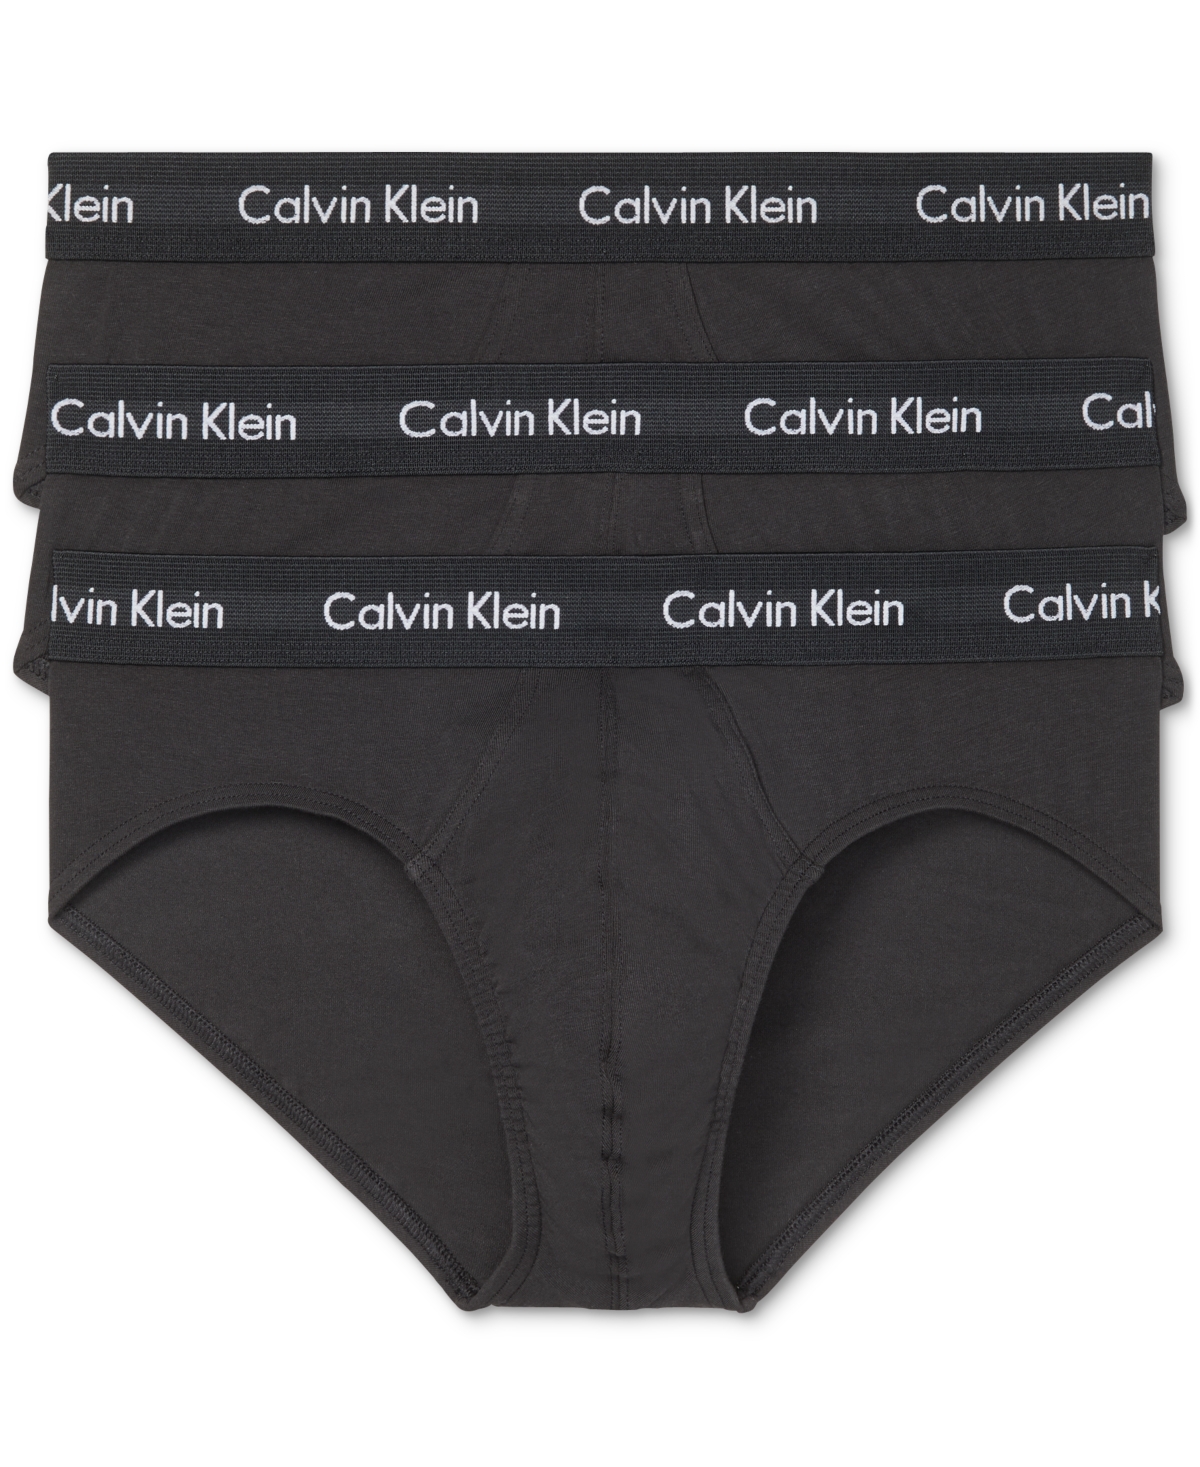 UPC 790812270561 product image for Calvin Klein Men's 3-Pack Cotton Stretch Briefs Underwear | upcitemdb.com